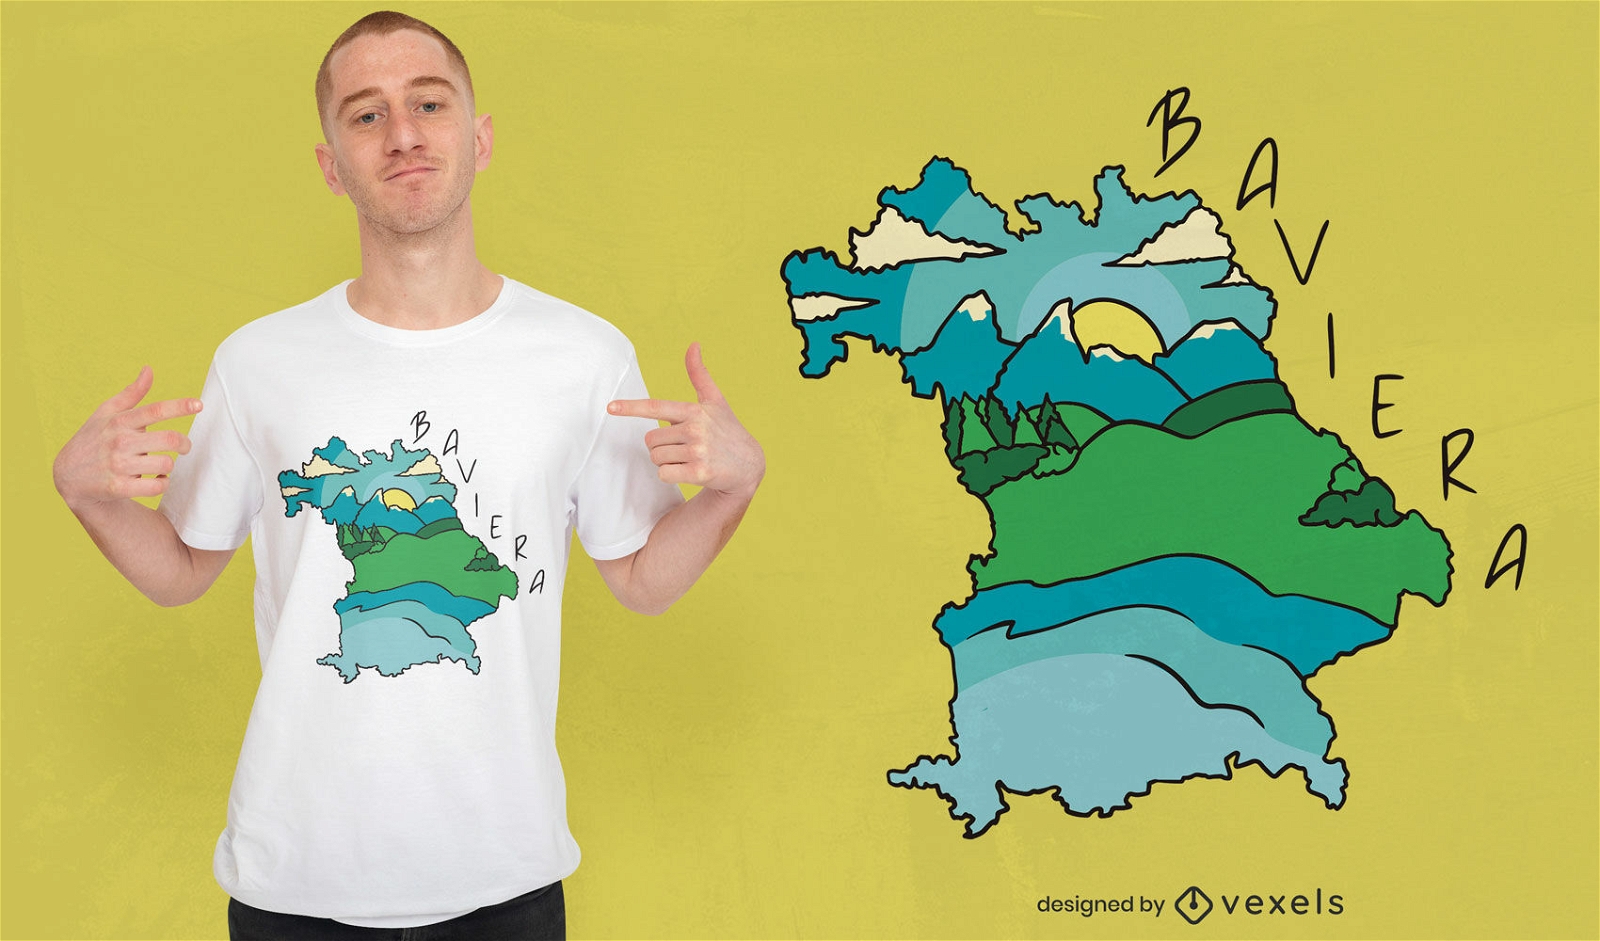 Baviera landscape and map t-shirt design